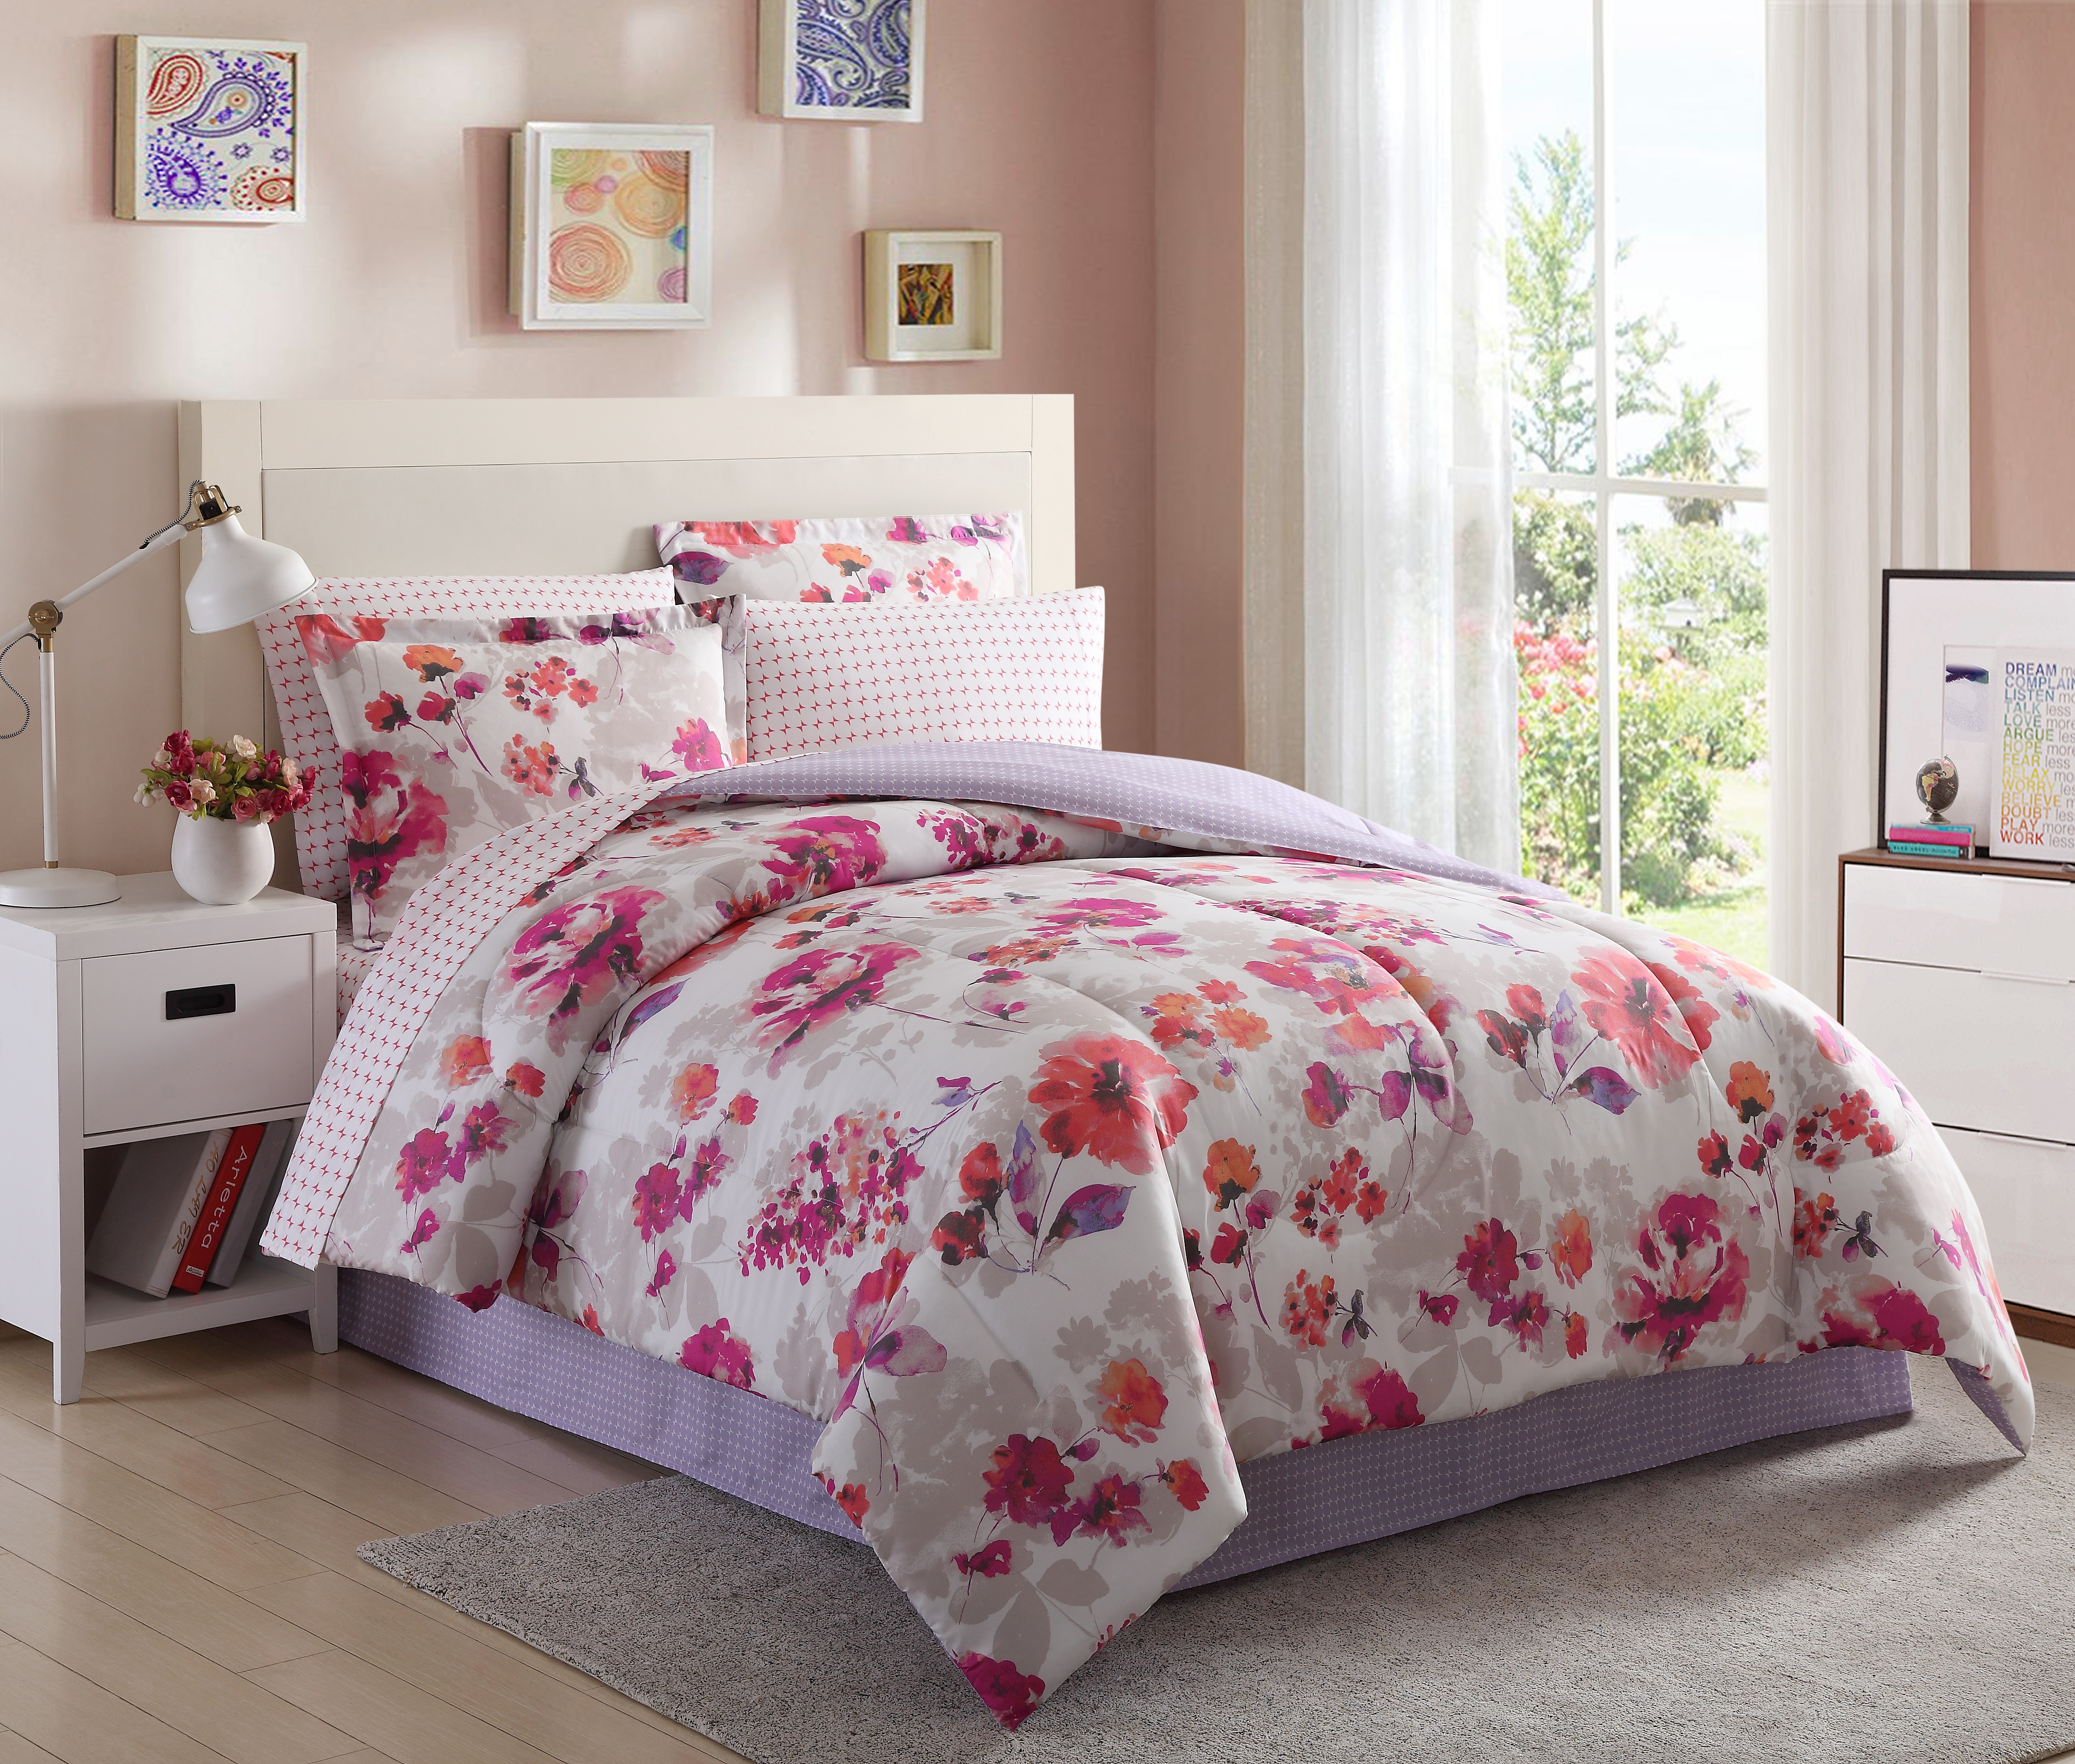 Essential Home Complete Bed Set - Floral